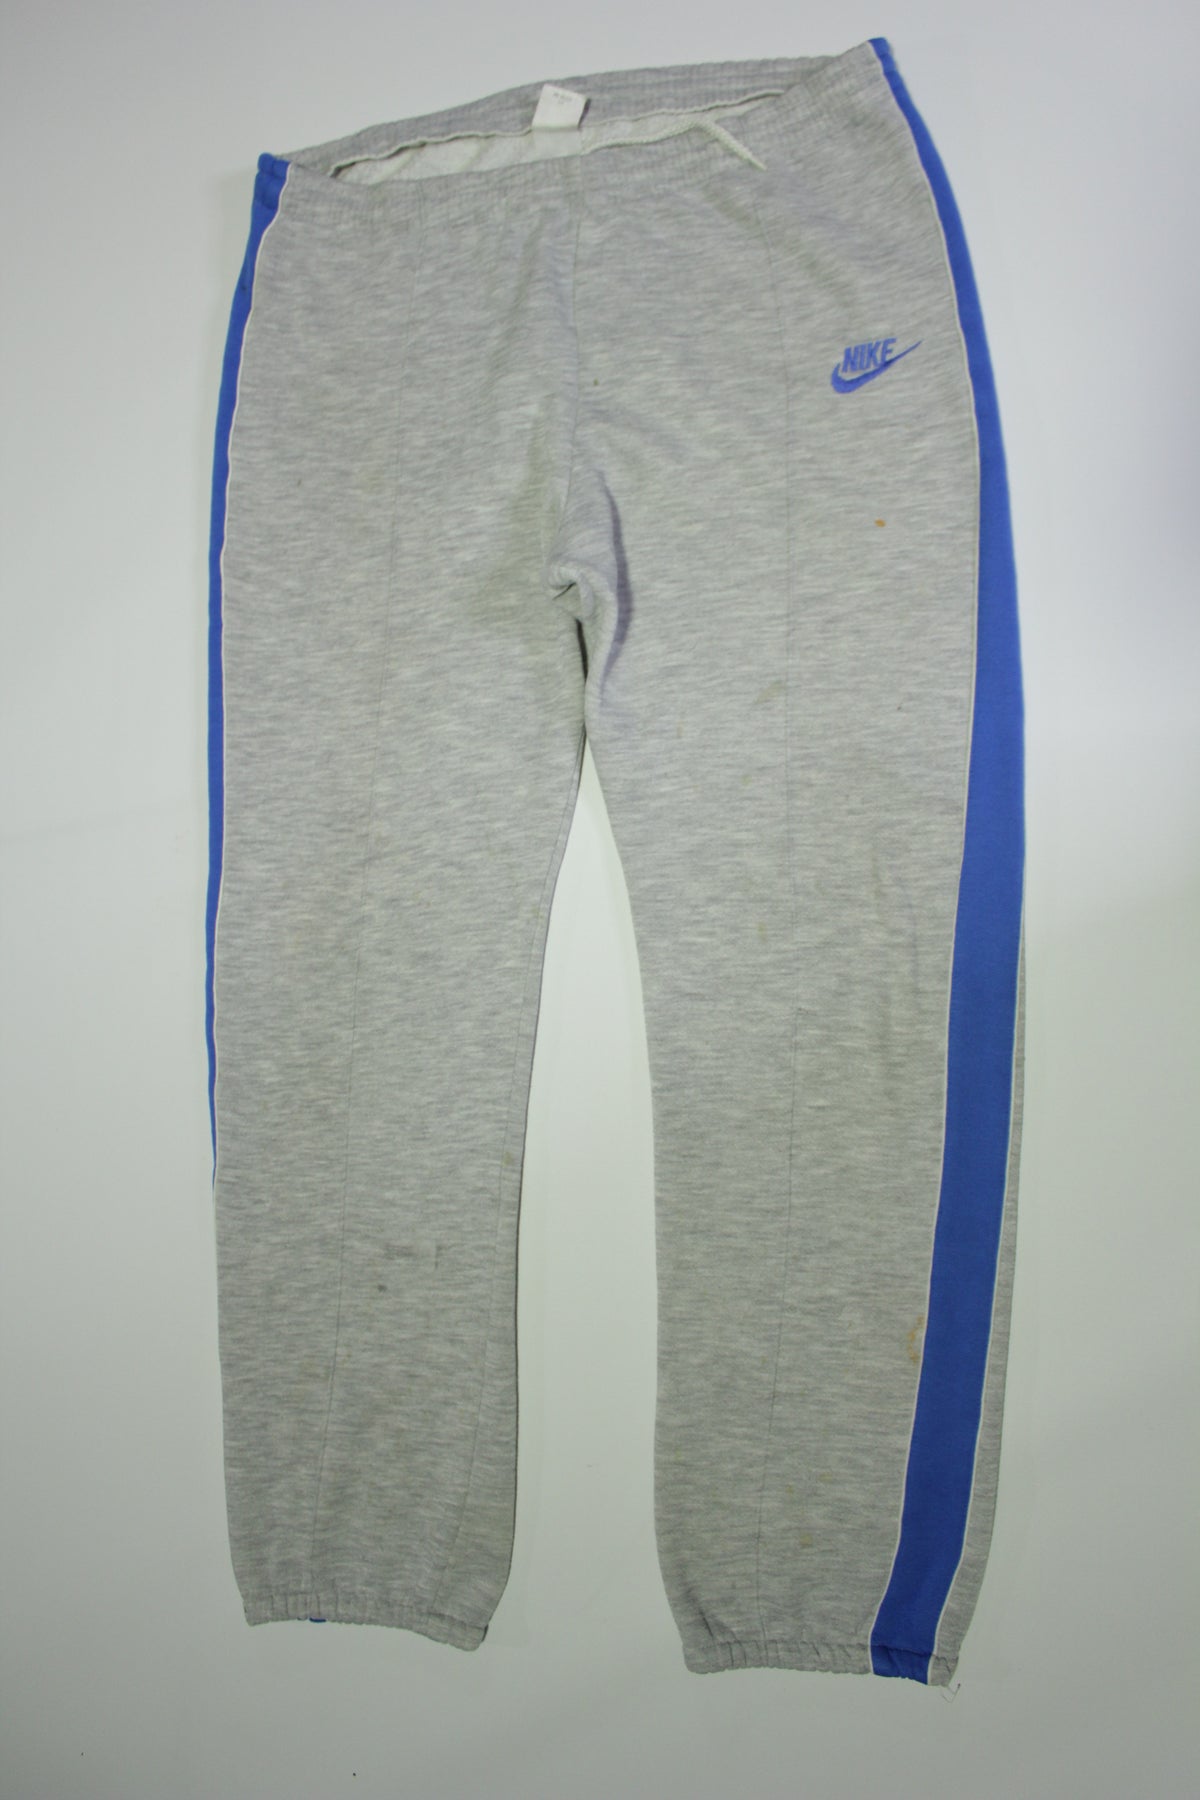 Nike Vintage 90's Heathered Gray Blue Striped Distressed Hoodie Track Sweats Pants